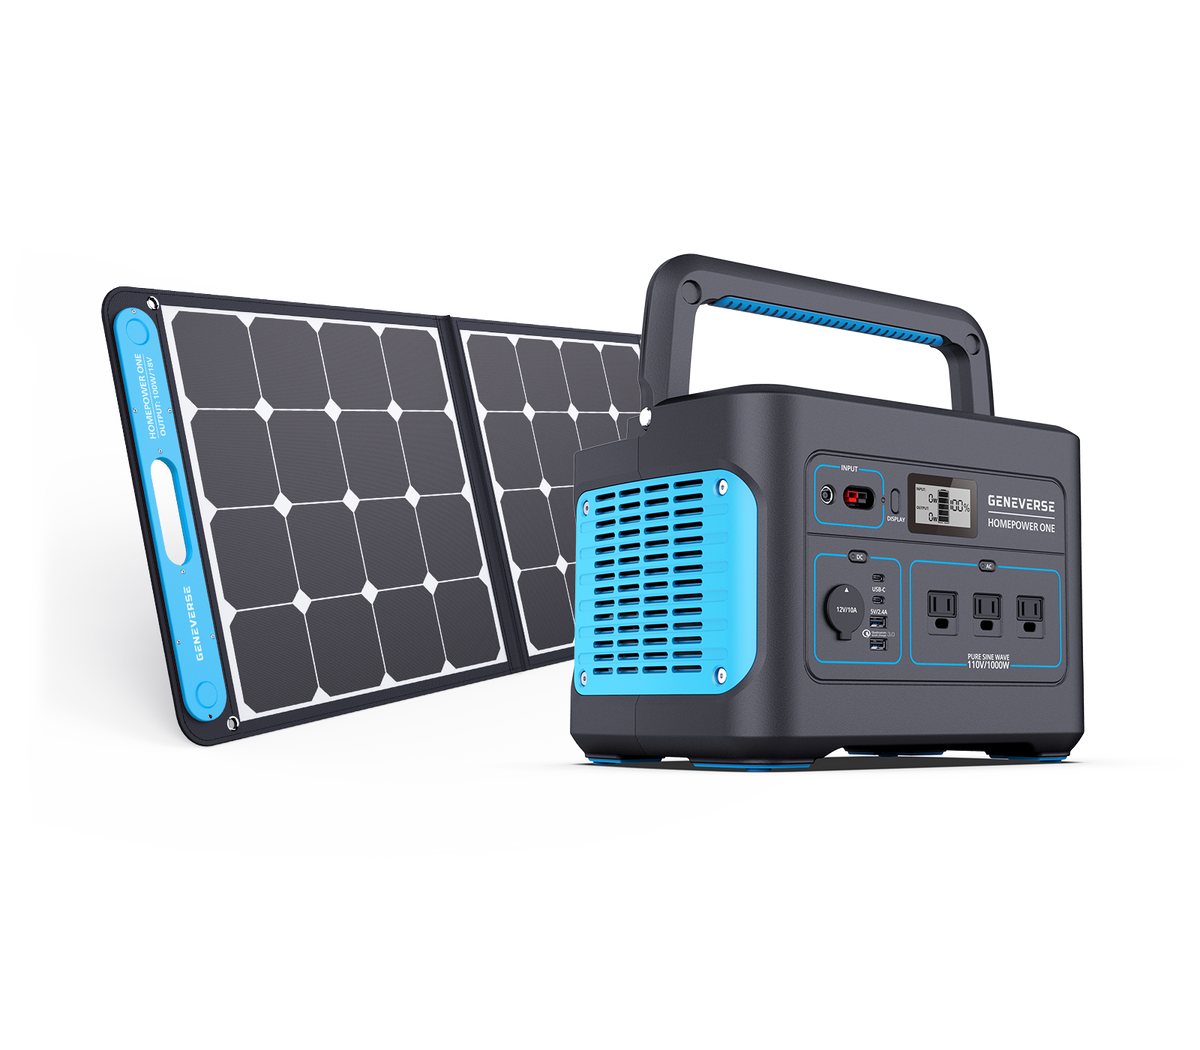 Geneverse HomePower ONE Solar Generator